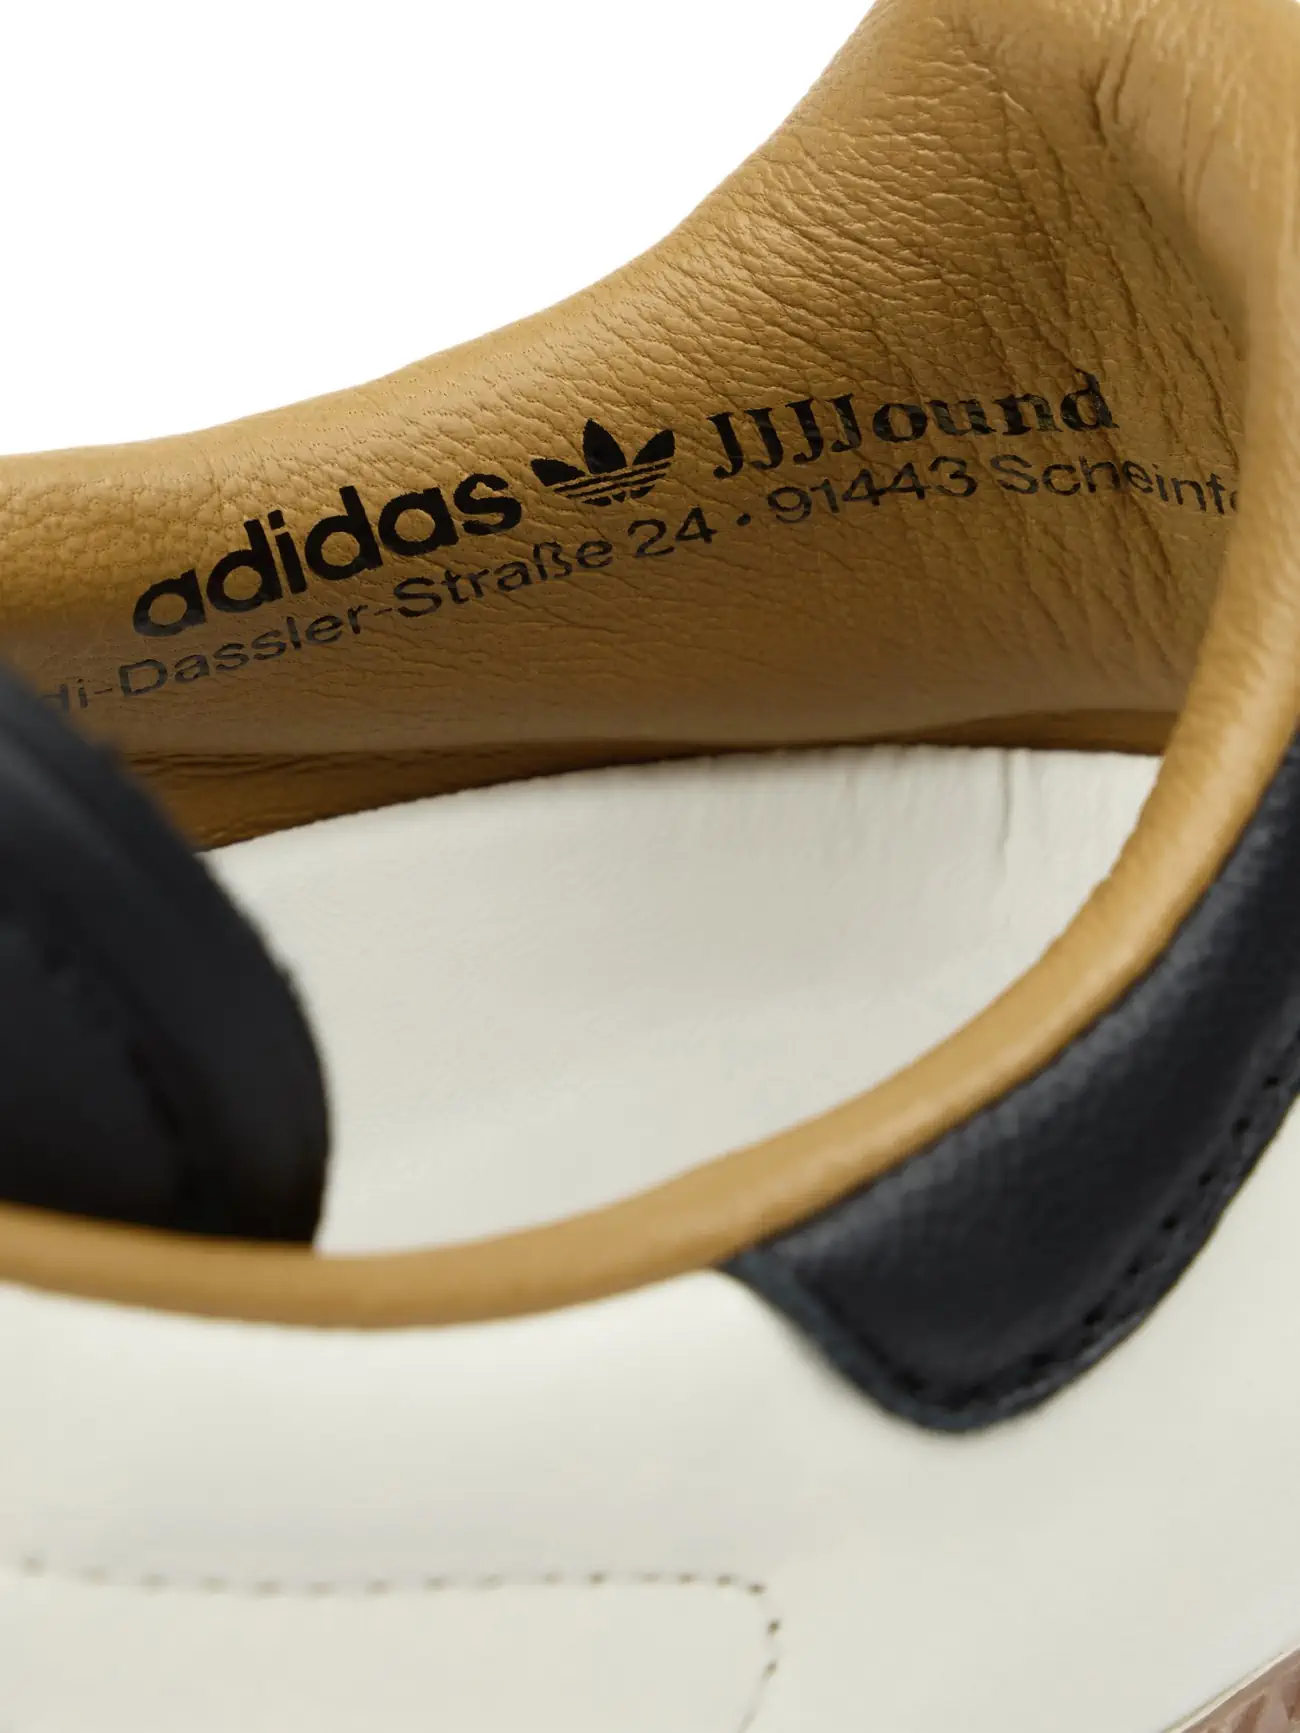 adidas Originals and JJJJound collaborate on two Samba sneakers